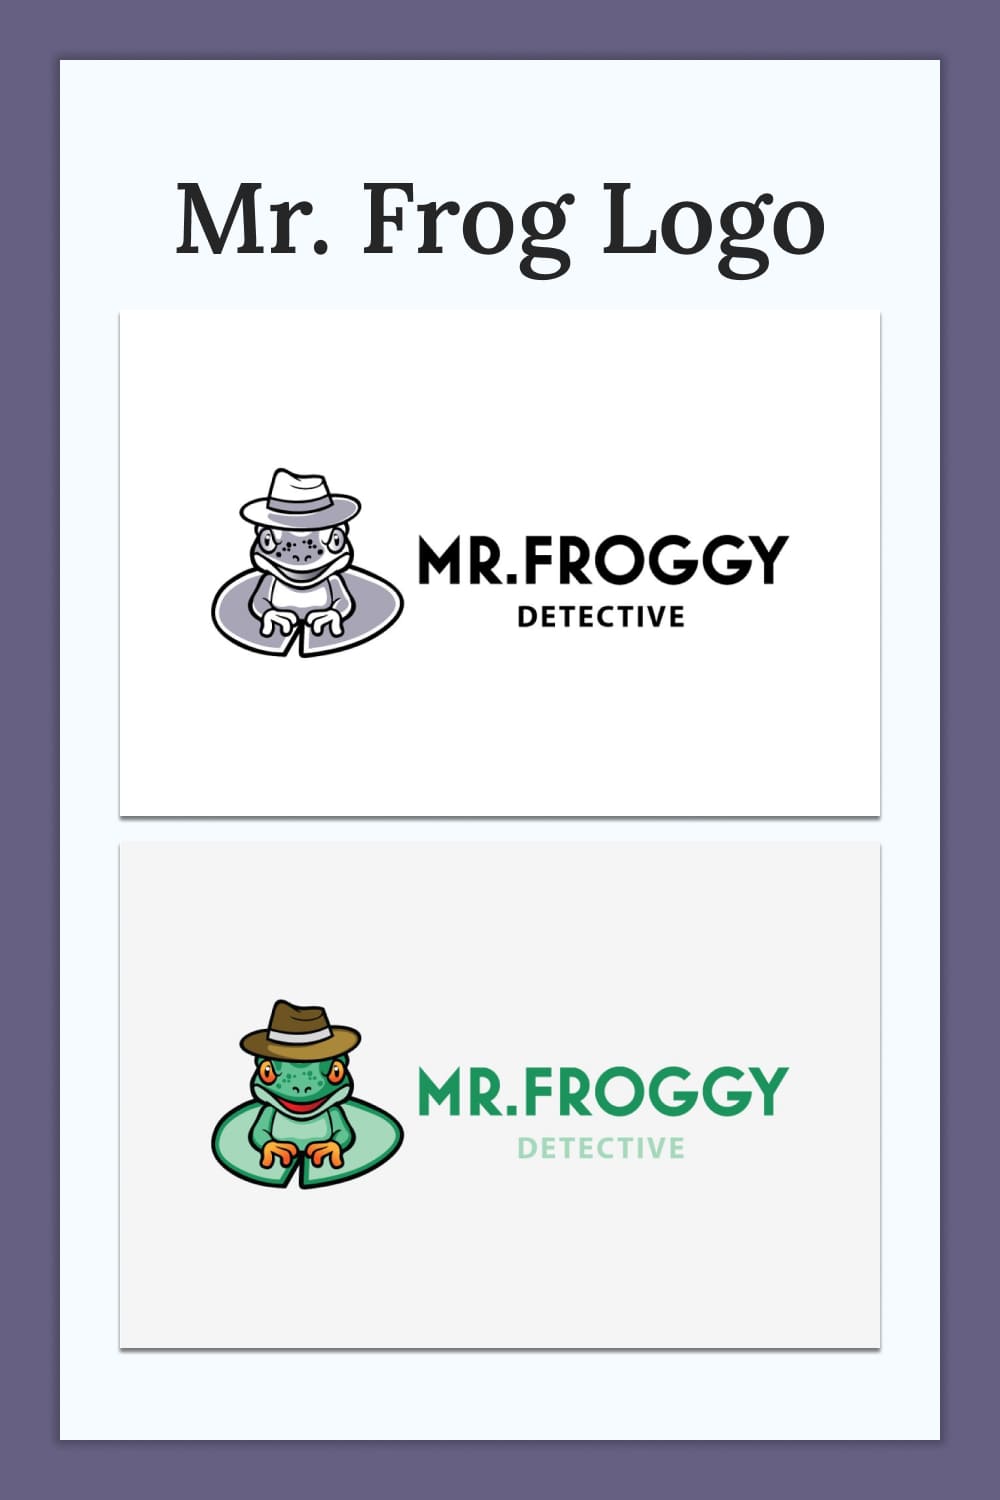 Mr. frog logo - pinterest image preview.